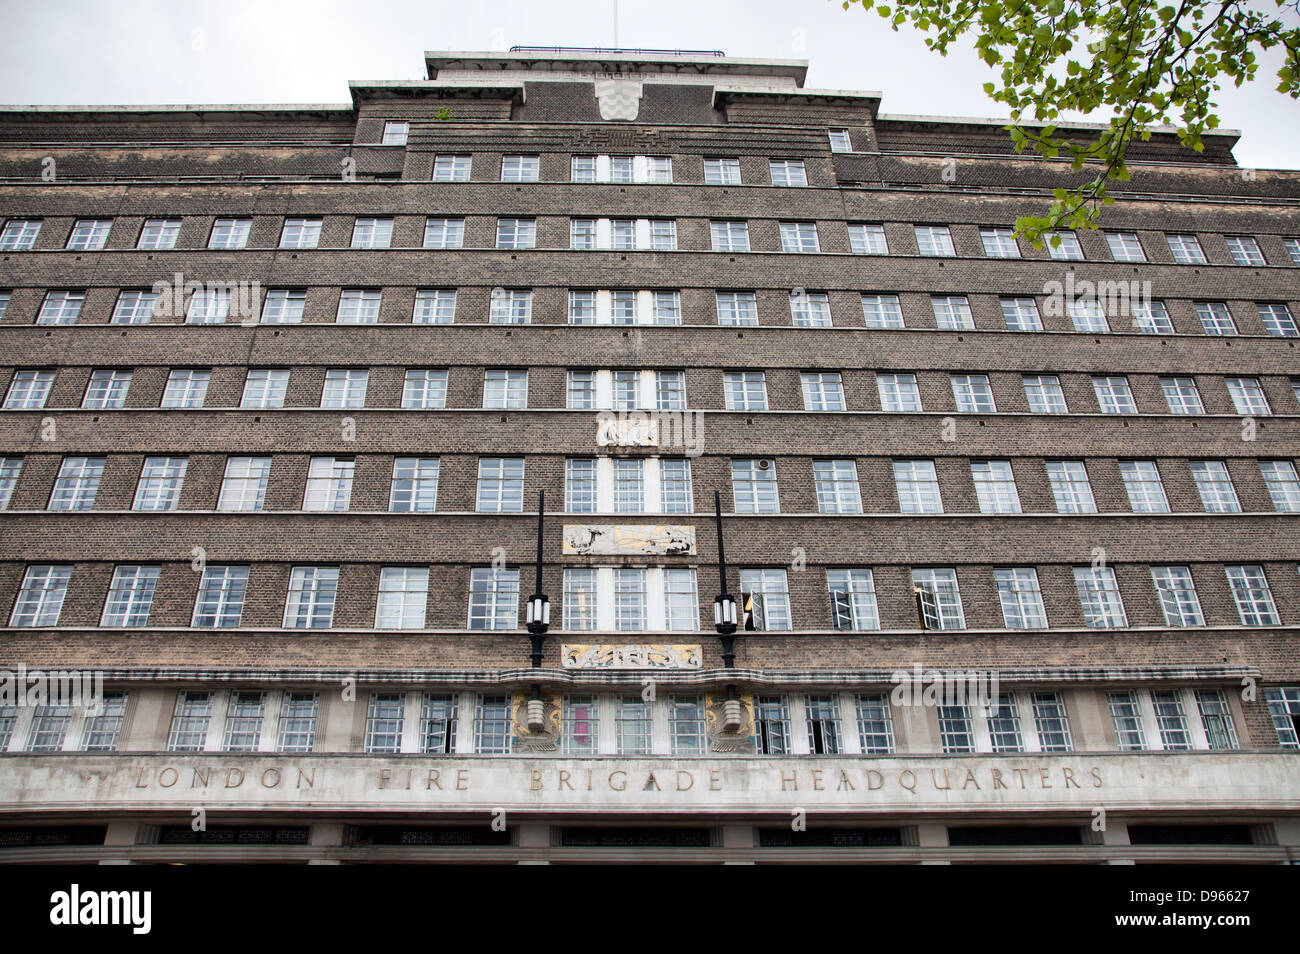 London Fire Brigade Headquarters on Union Street in Southwark - London UK Stock Photo